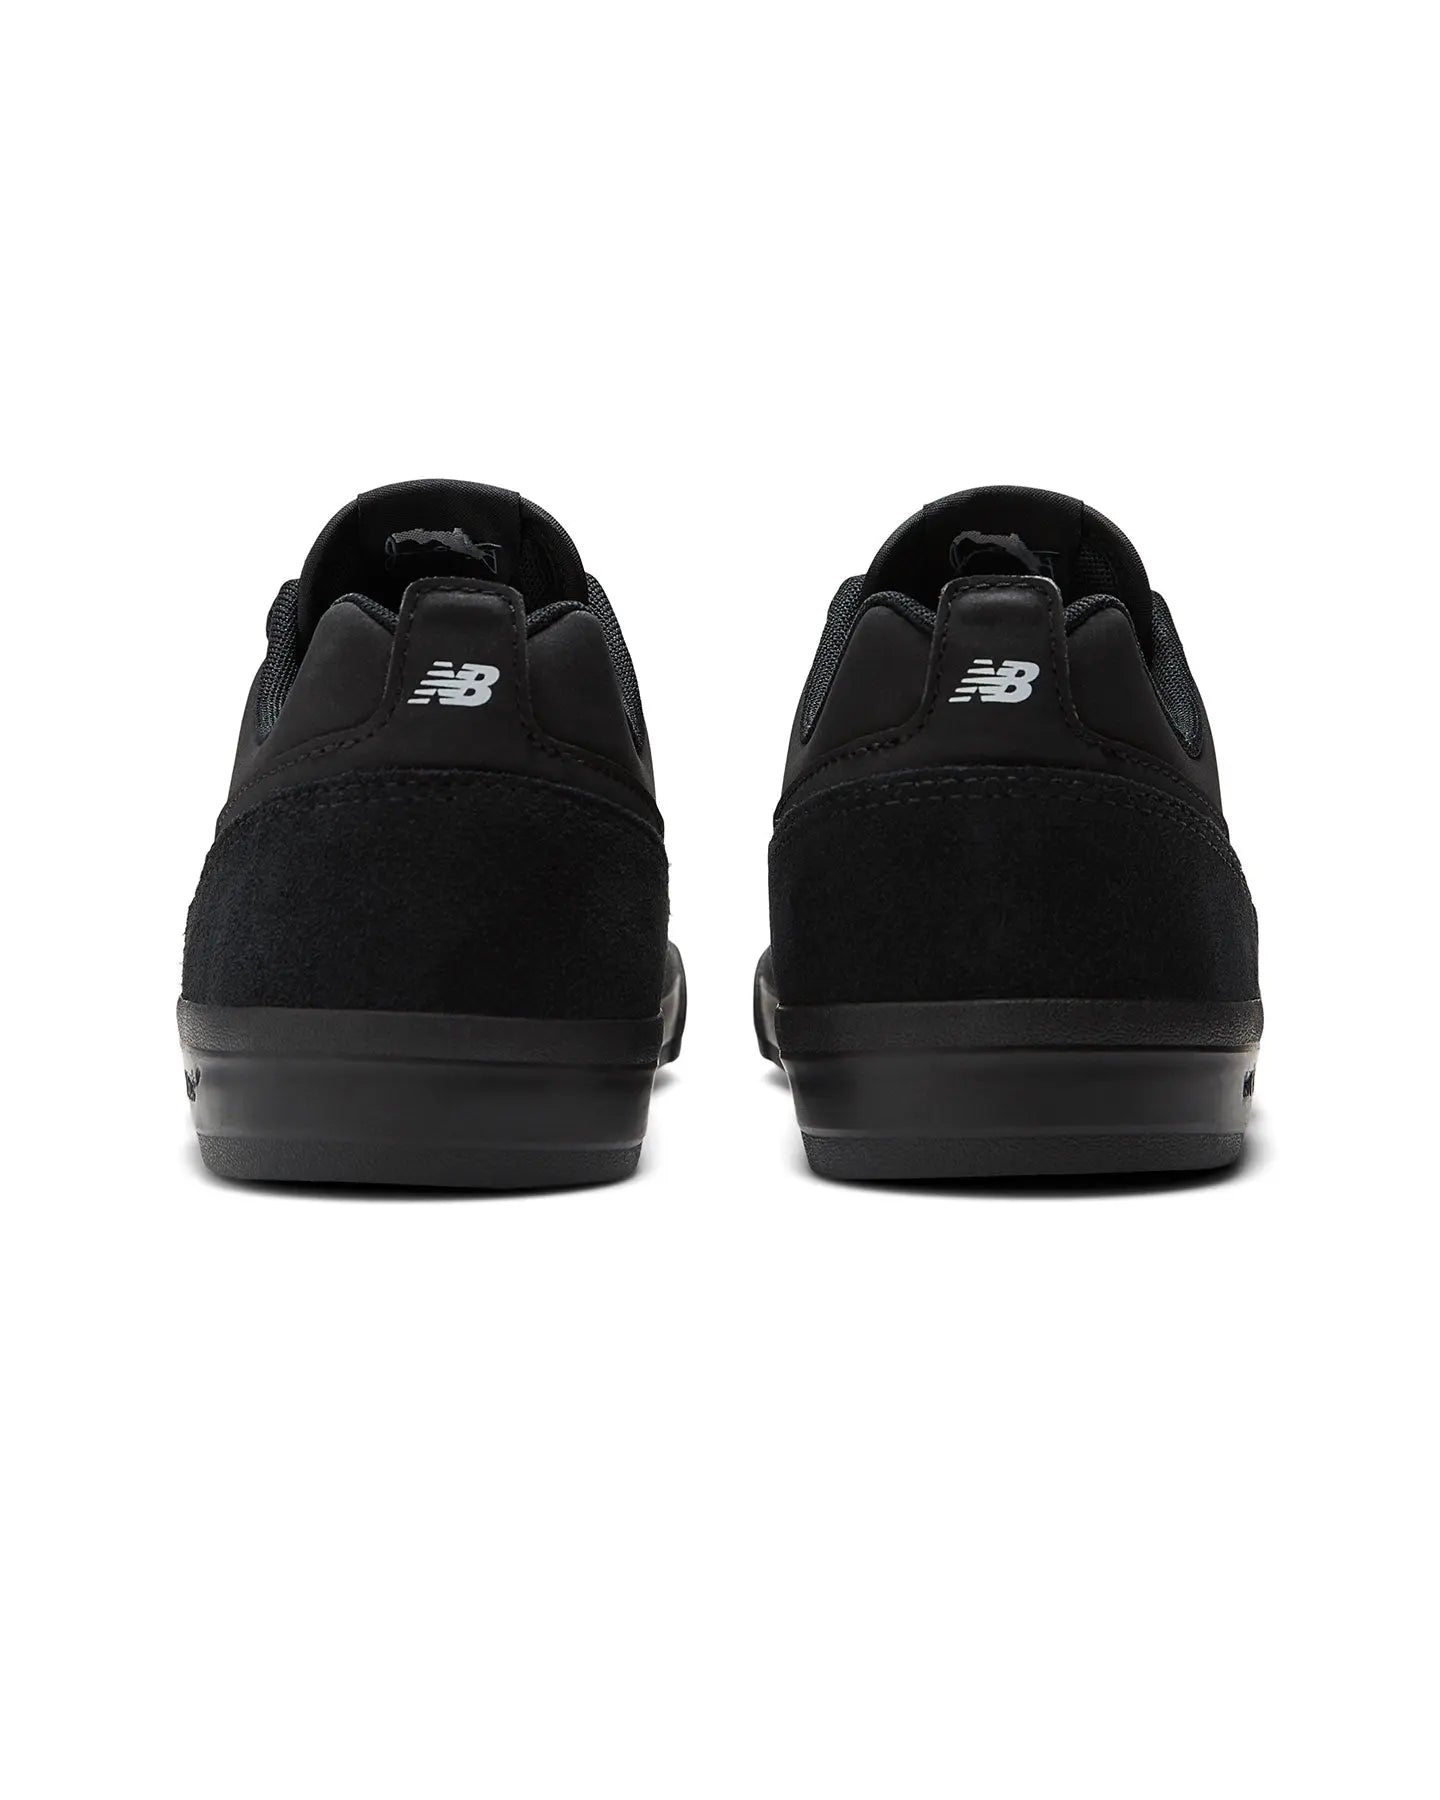 New Balance 306 - Black / Black Footwear